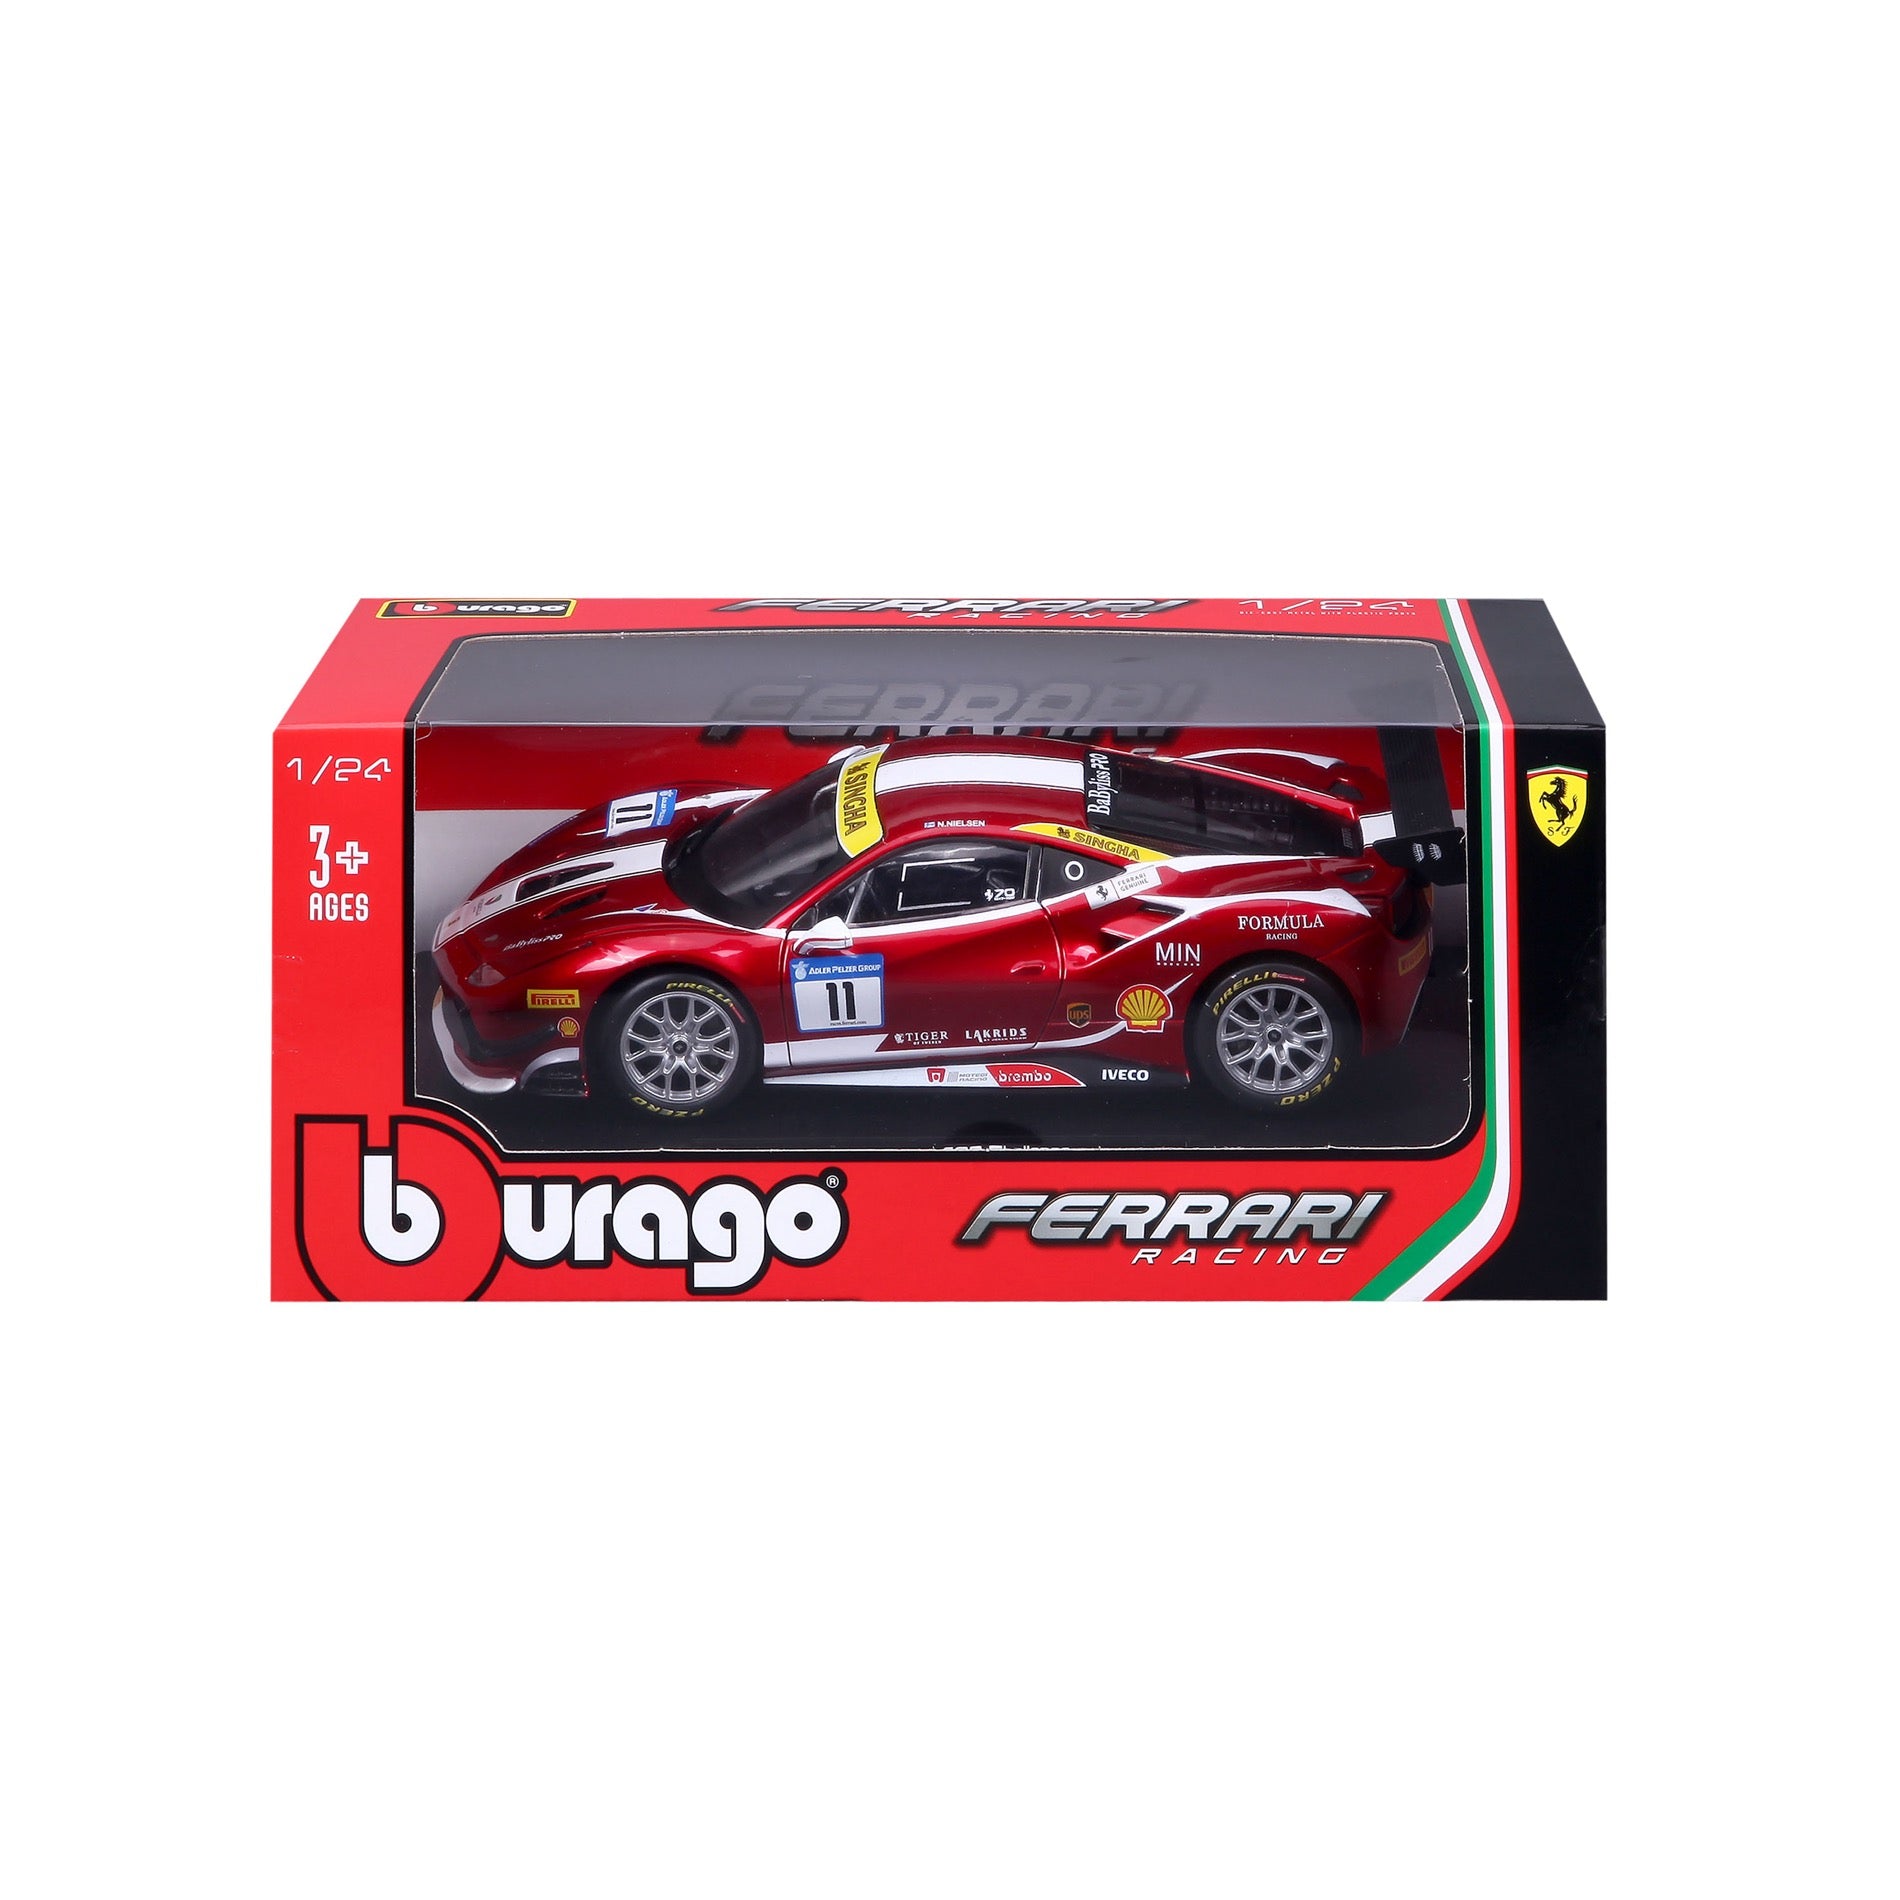 Ferrari 488 Challenge #11, Candy Red - Bburago 18-26308 - 1/24